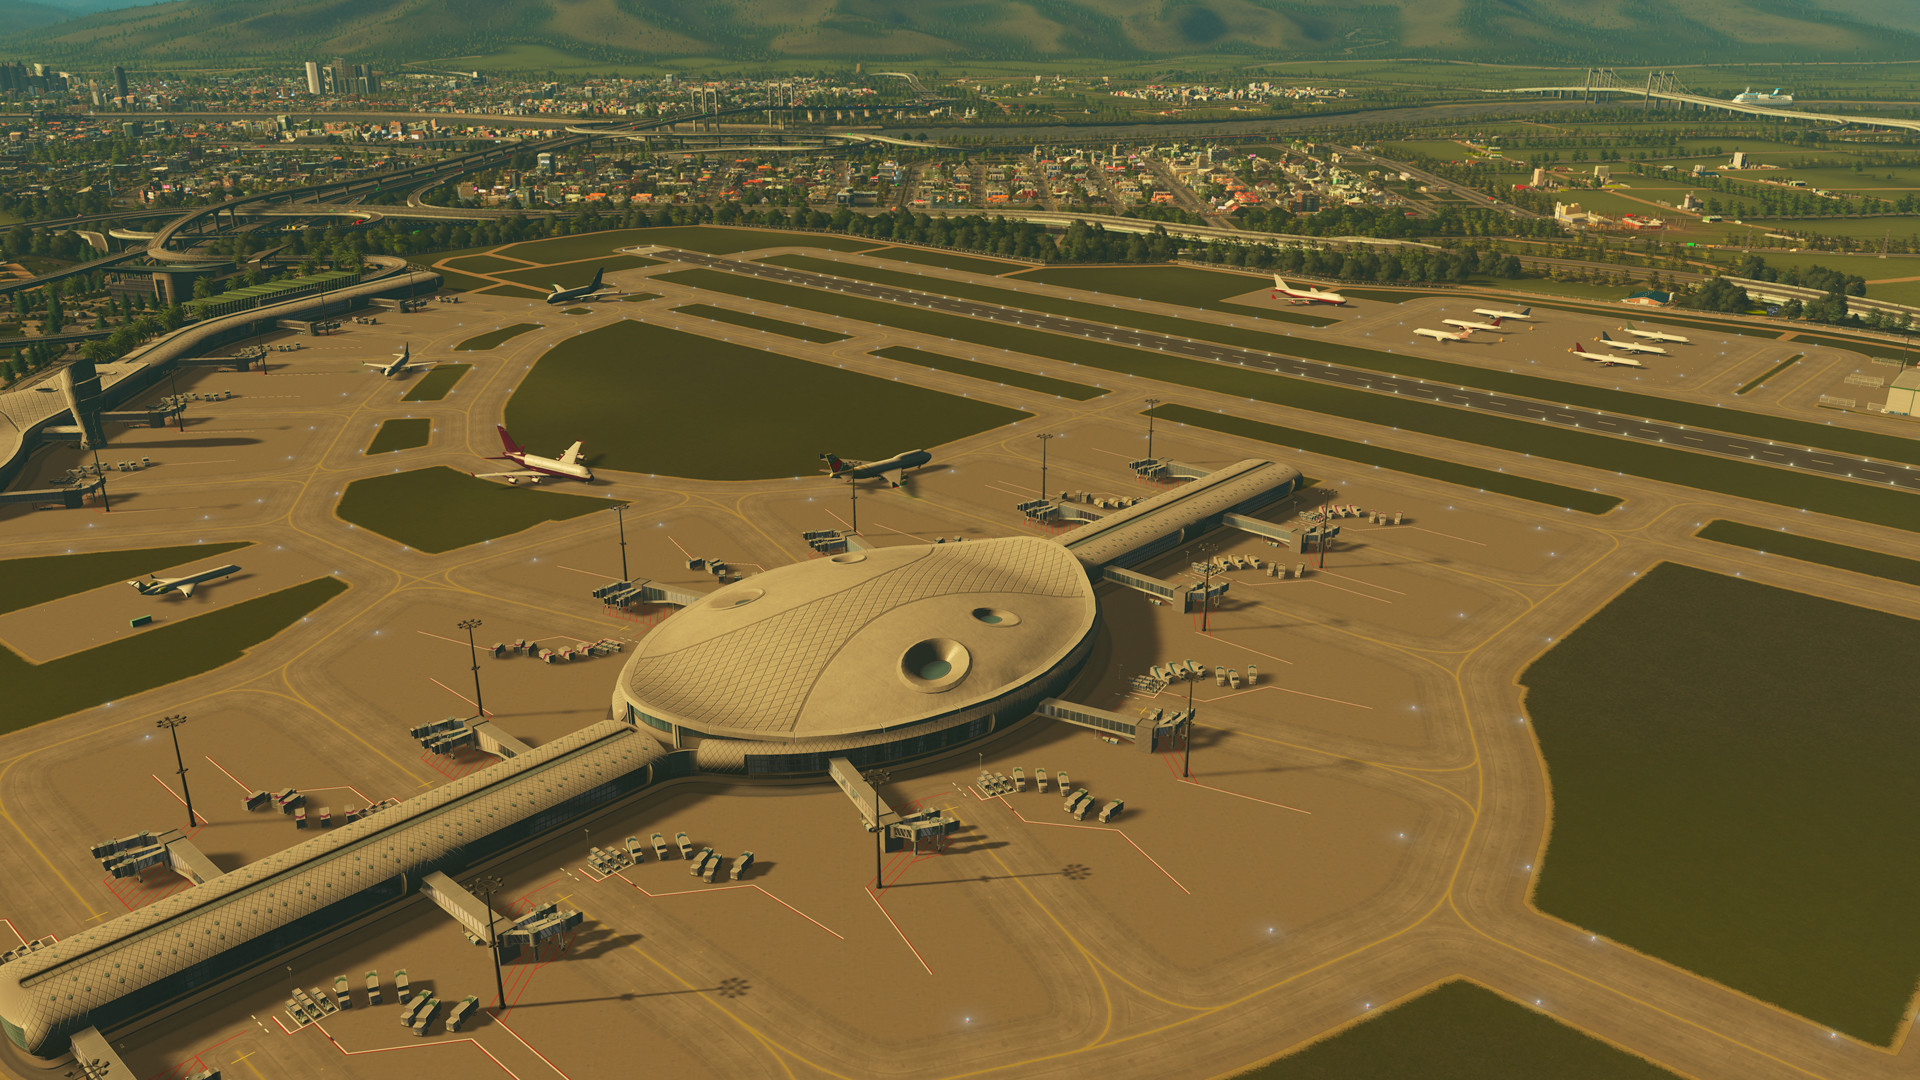 Cities: Skylines - Airports DLC EU Steam CD Key